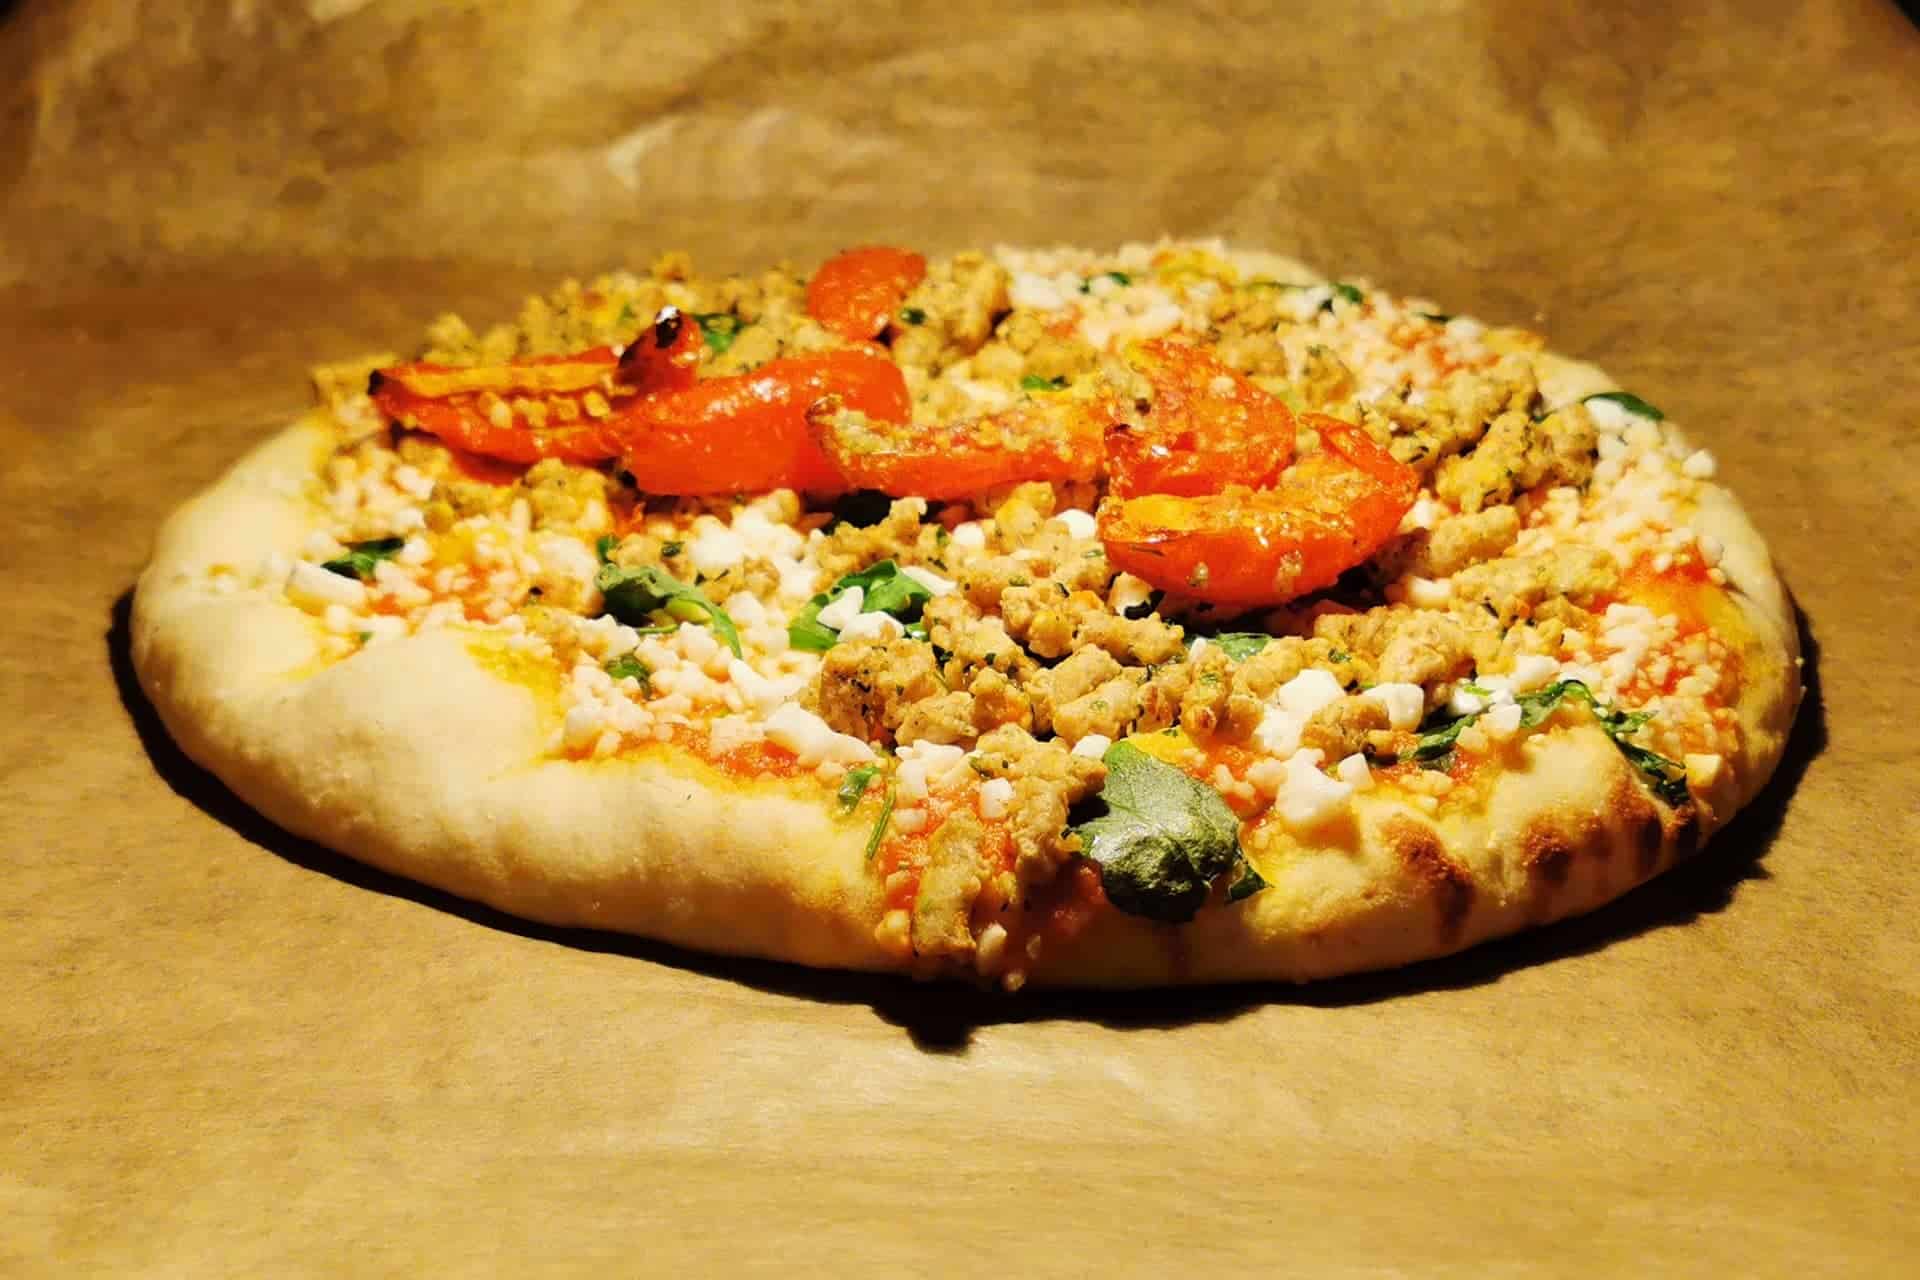 Food for Future: Pizza Italian Style